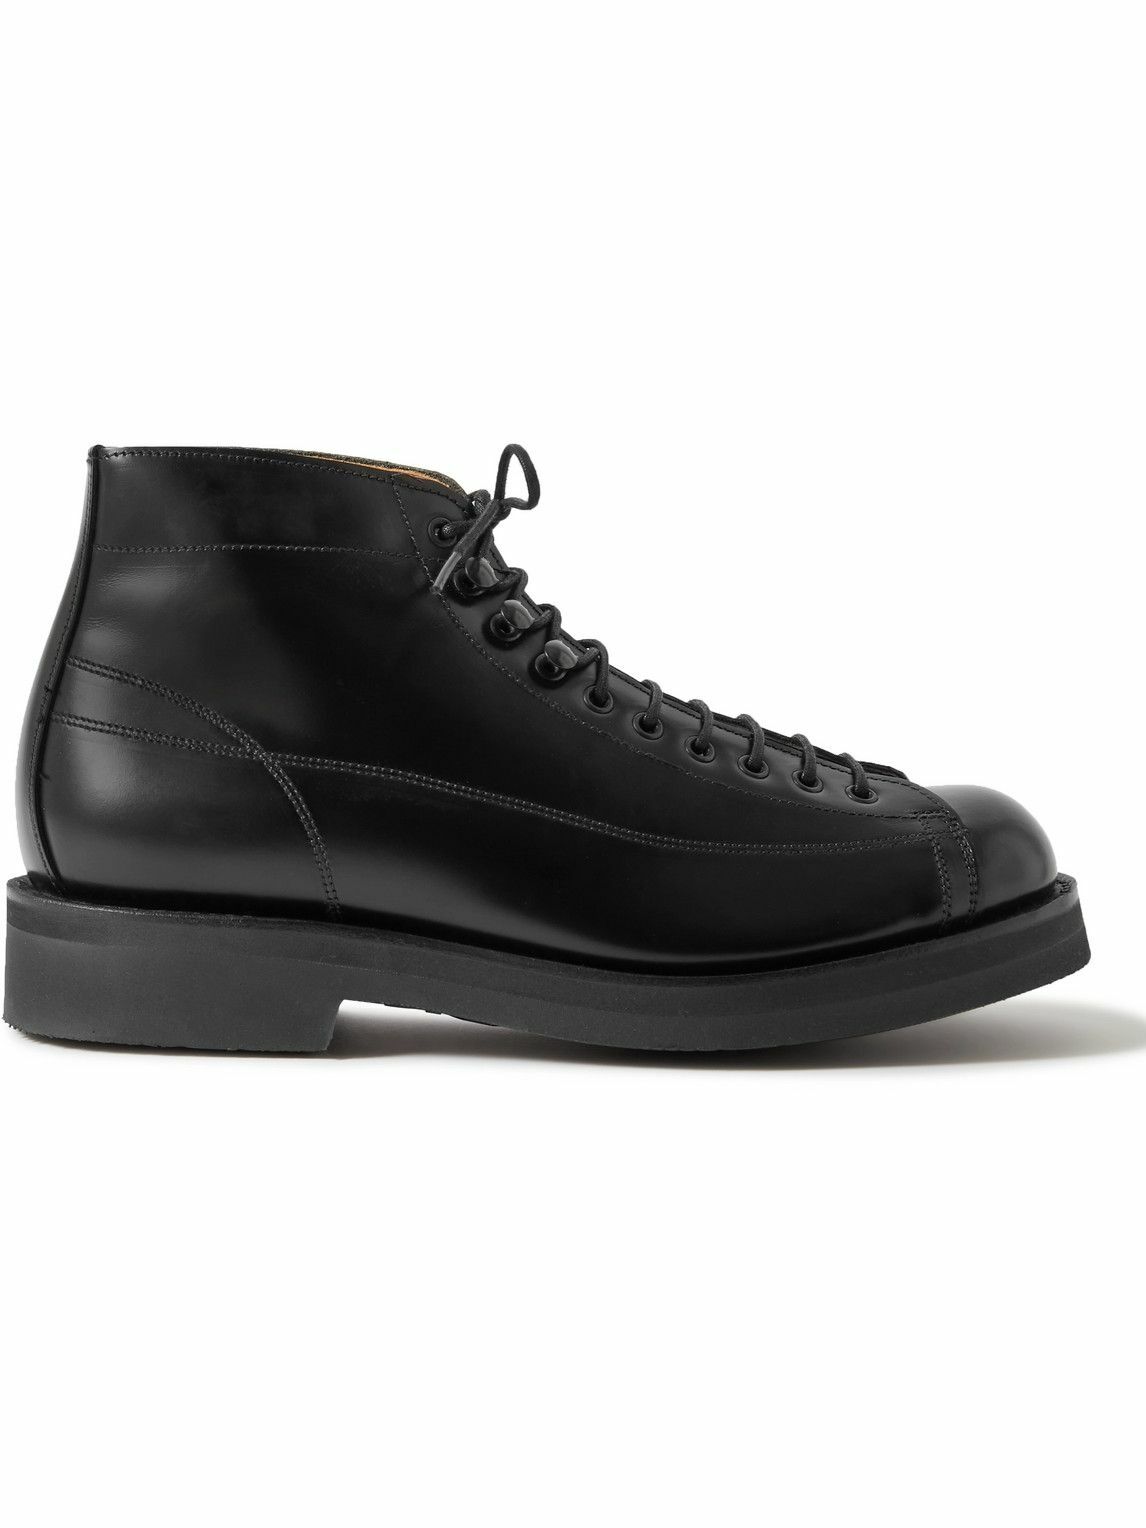 Photo: Grenson - Dexter Leather Boots - Black